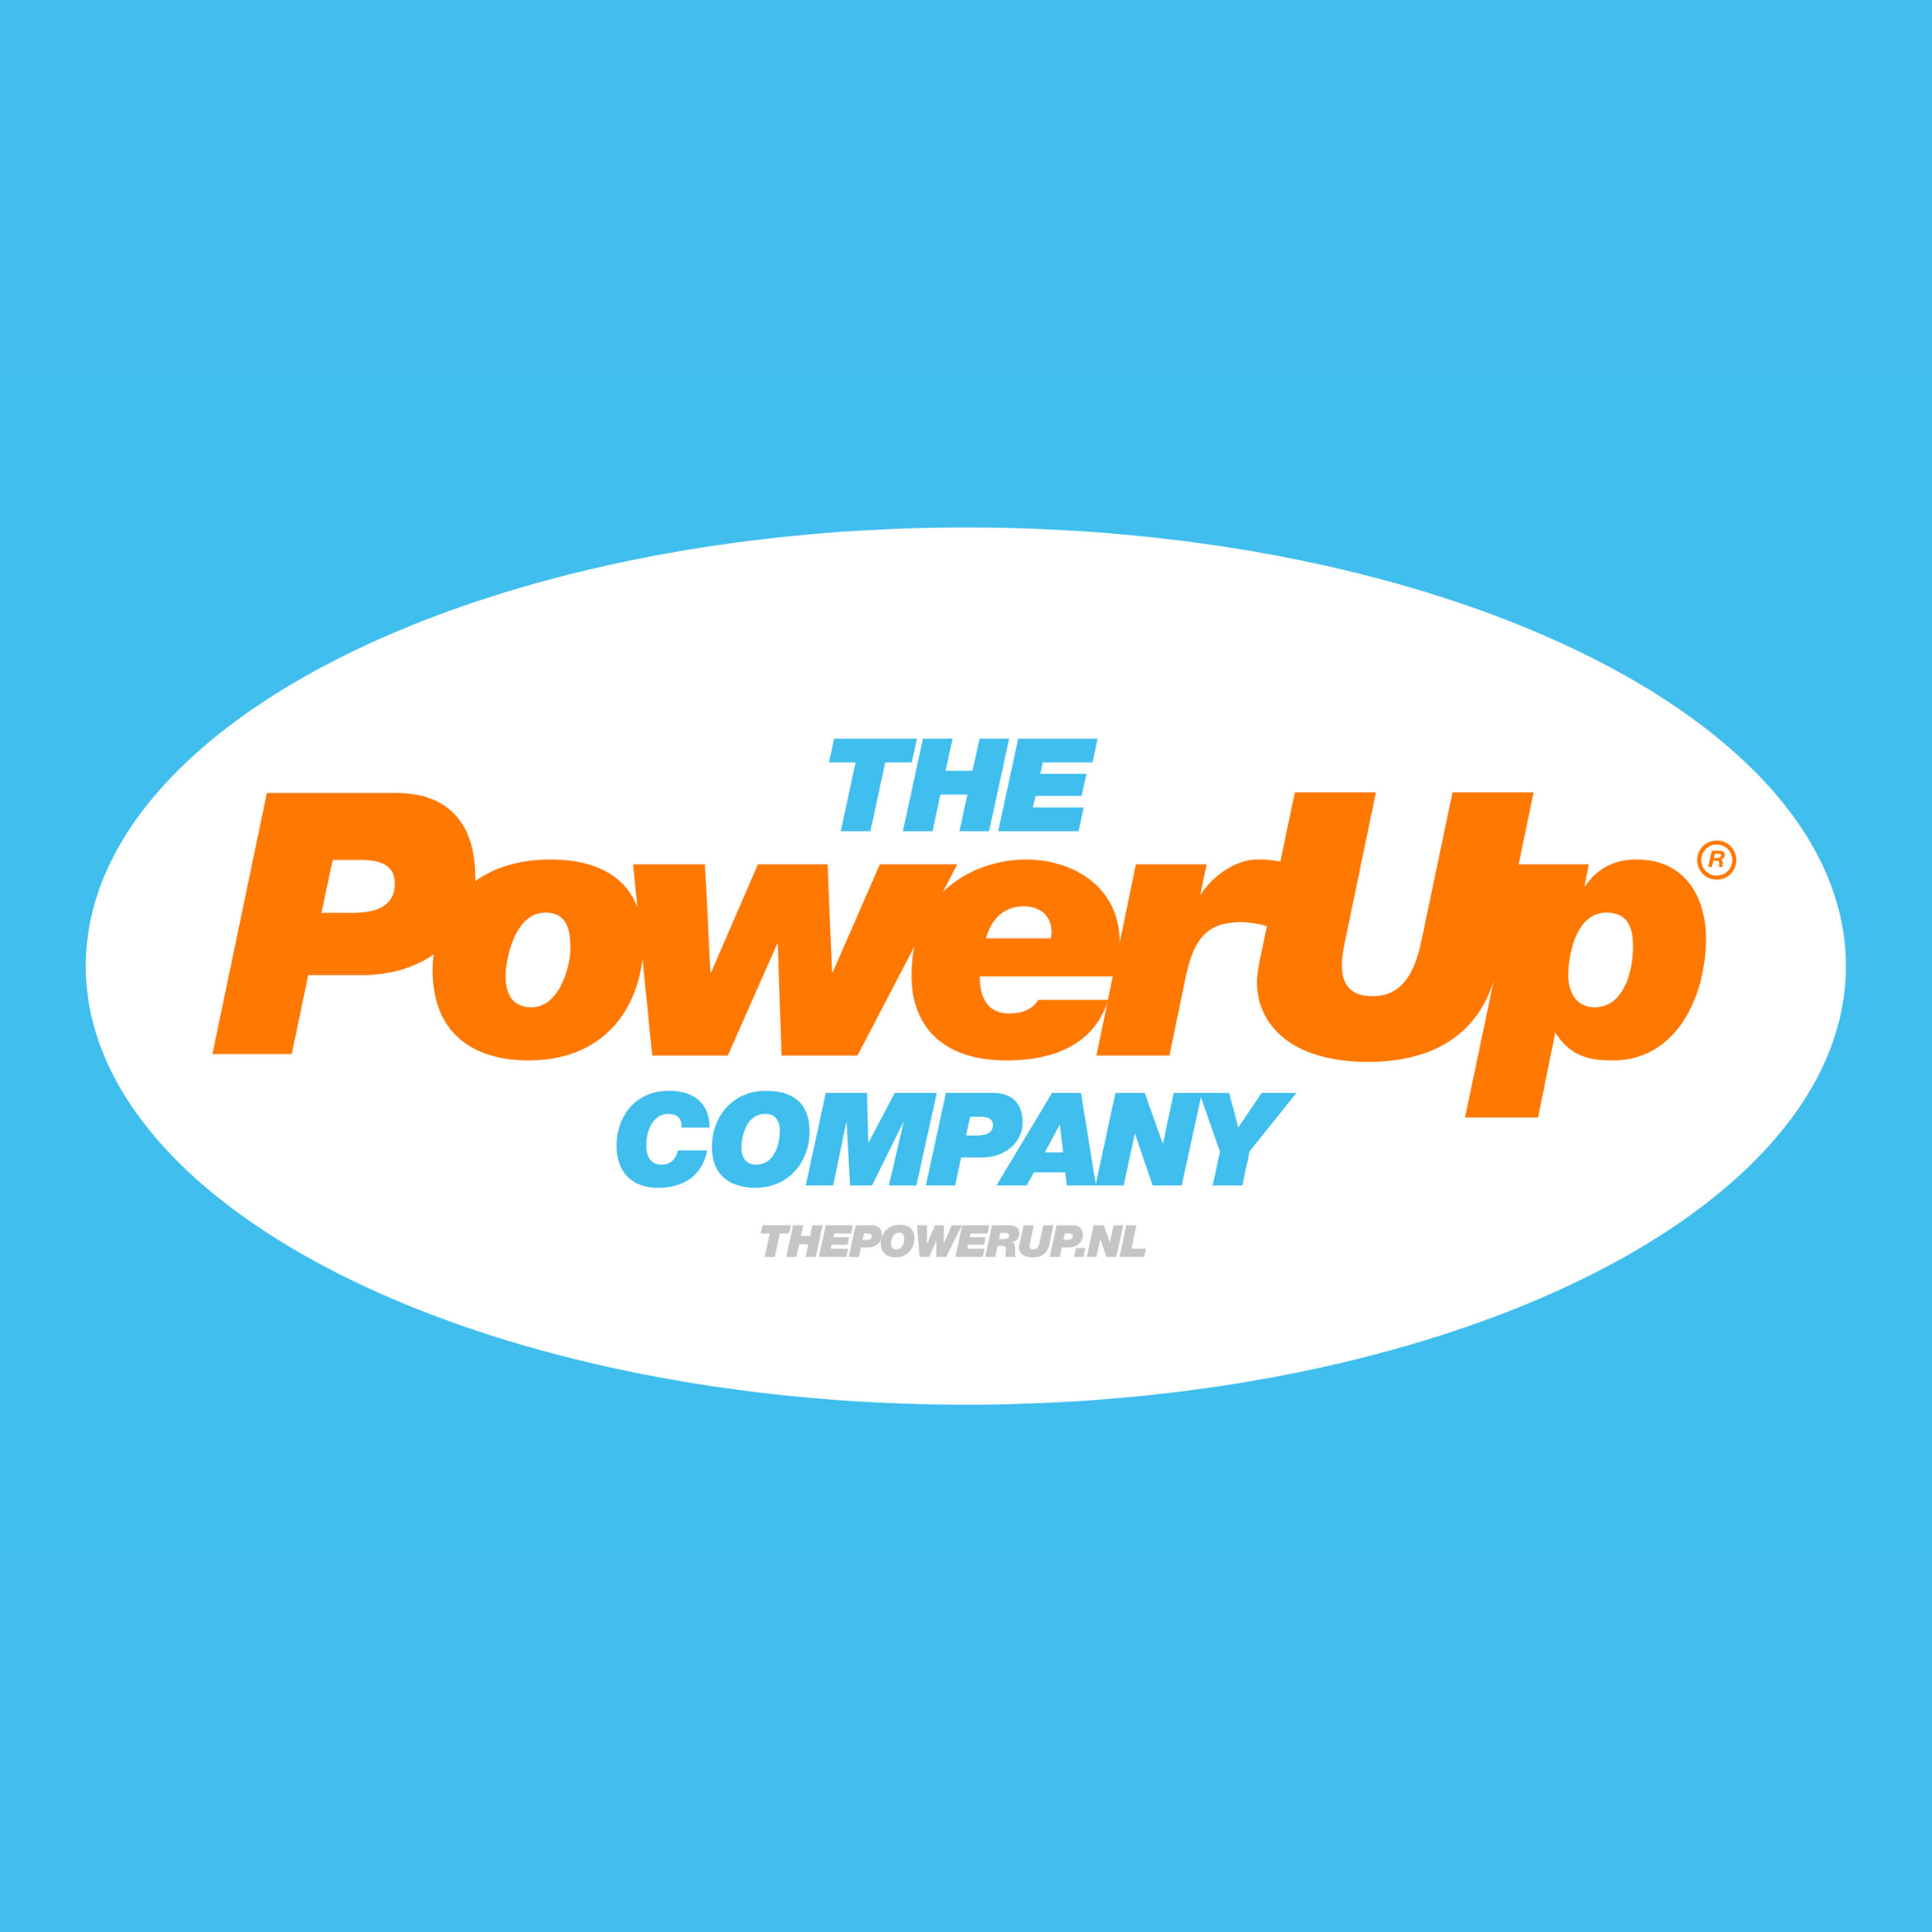 The PowerUp company